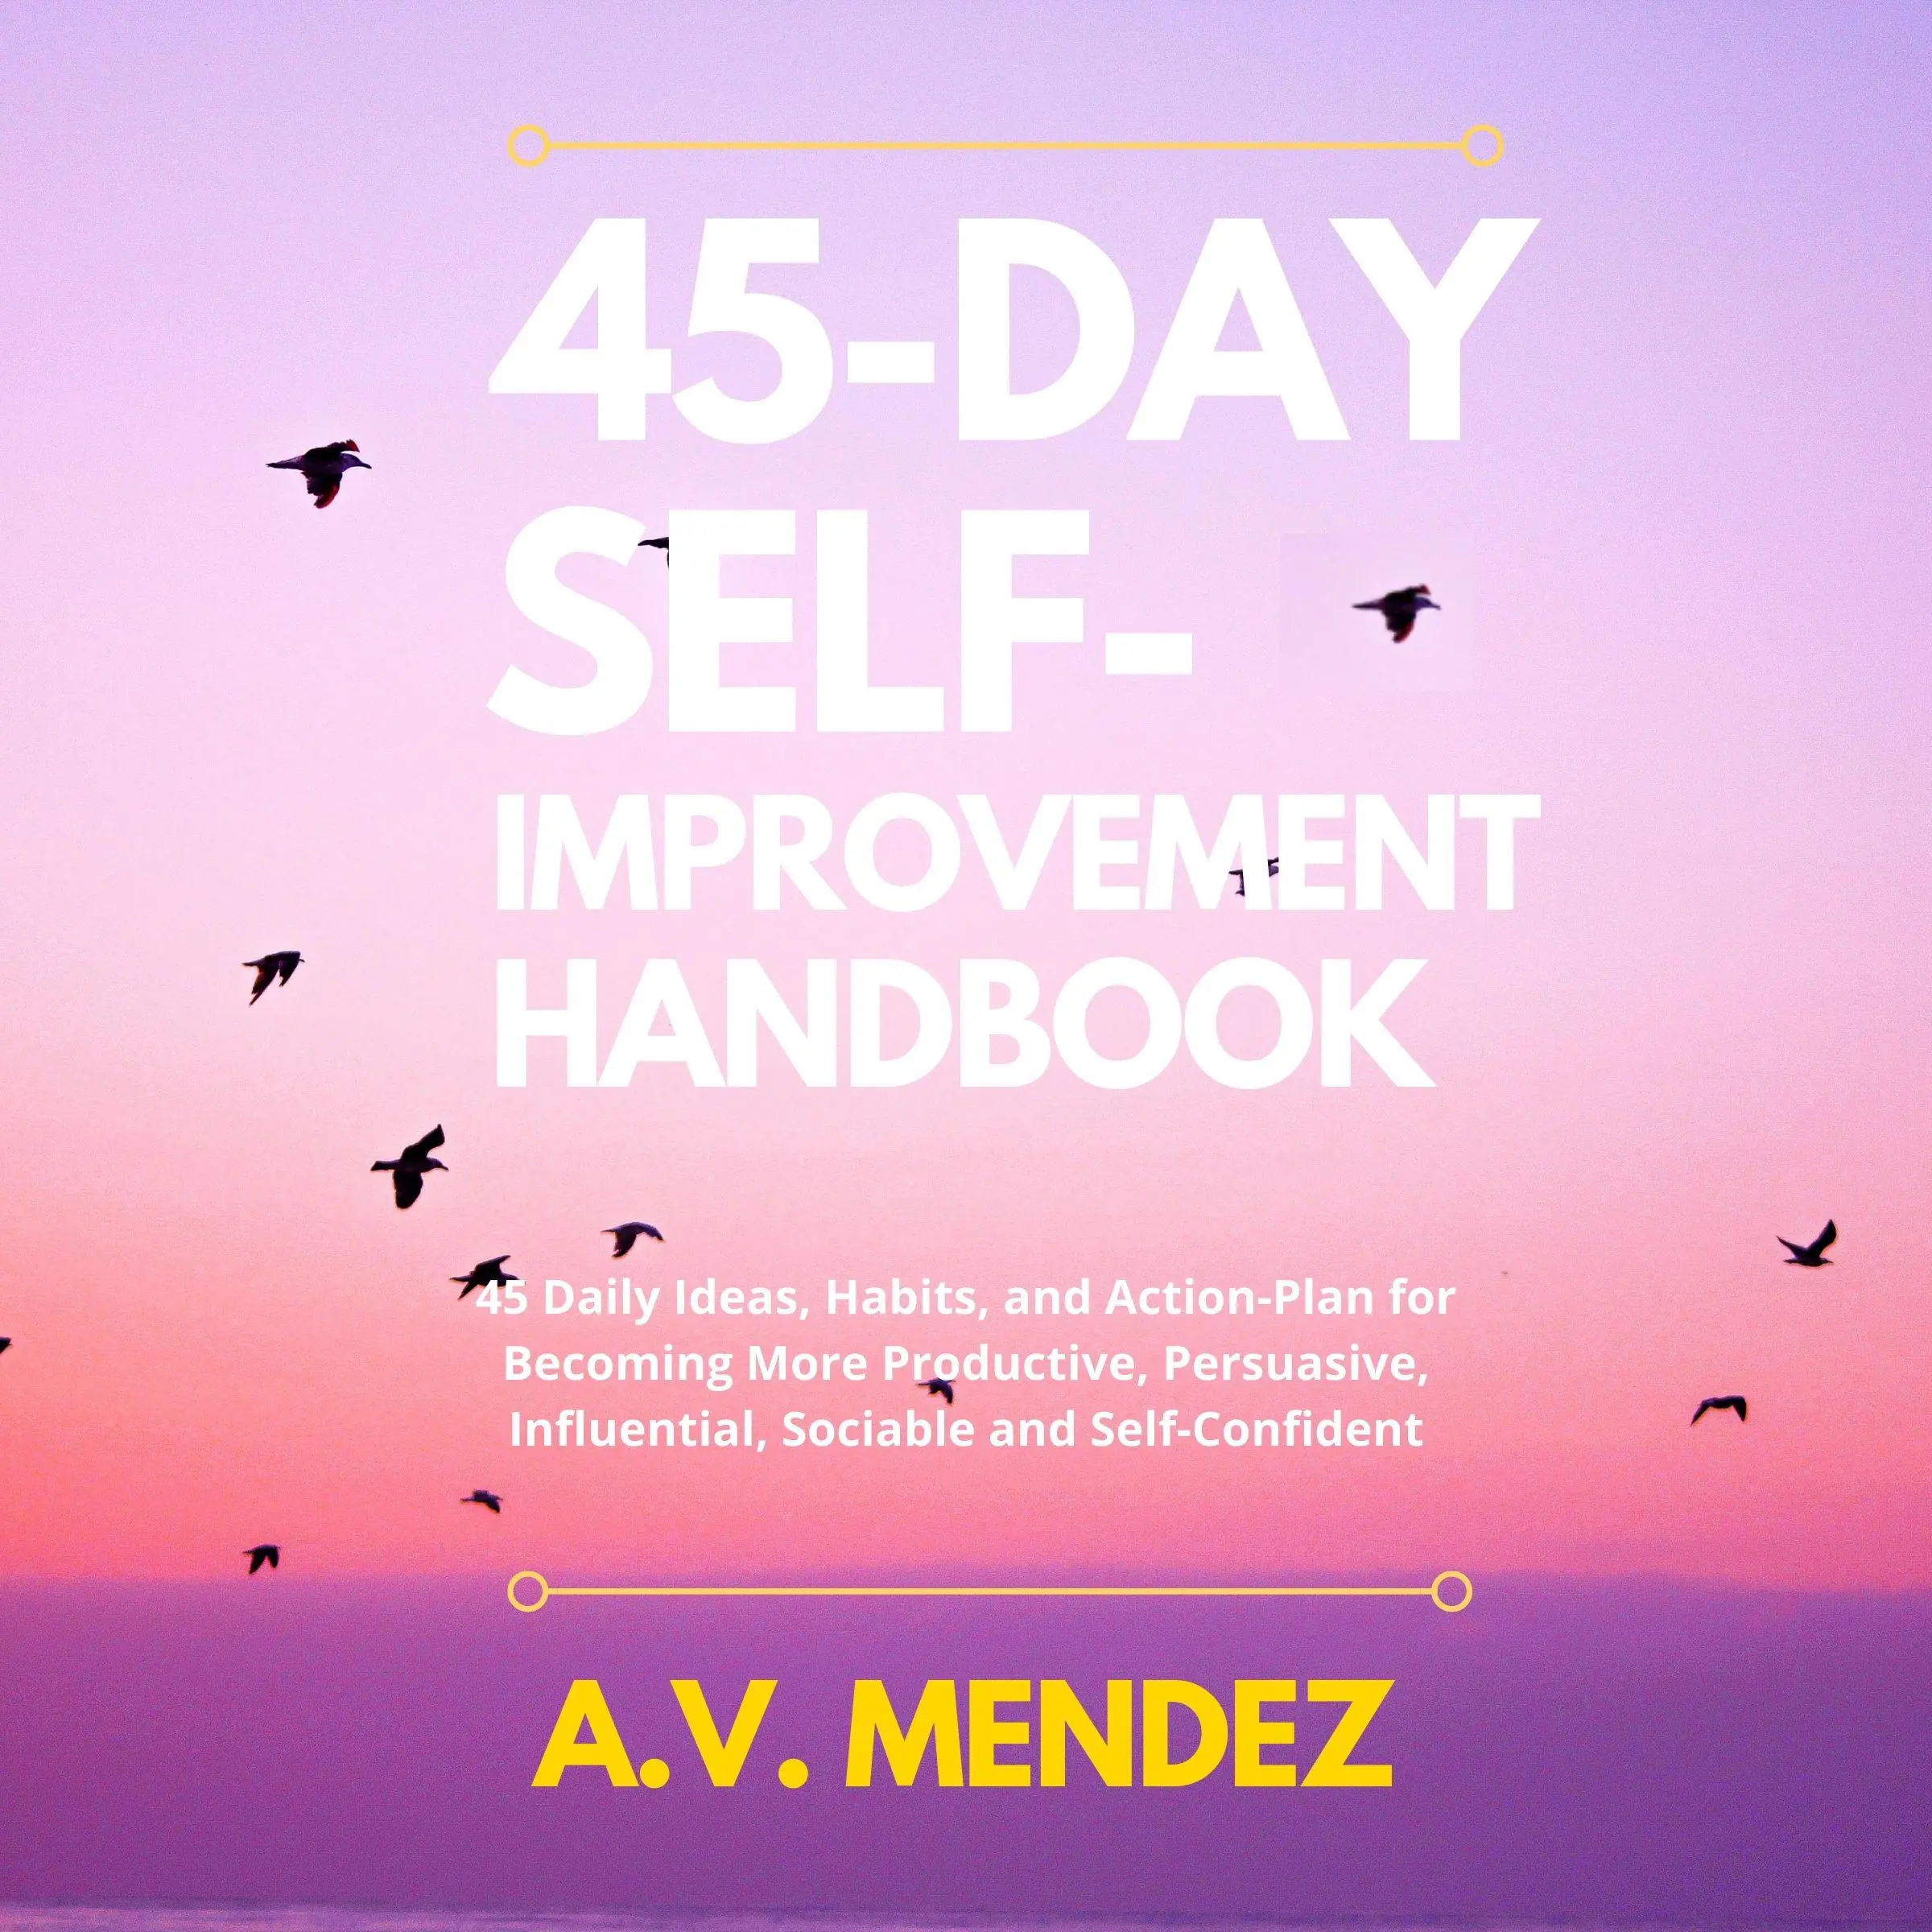 45 Day Self-Improvement Handbook Audiobook by A.V. Mendez